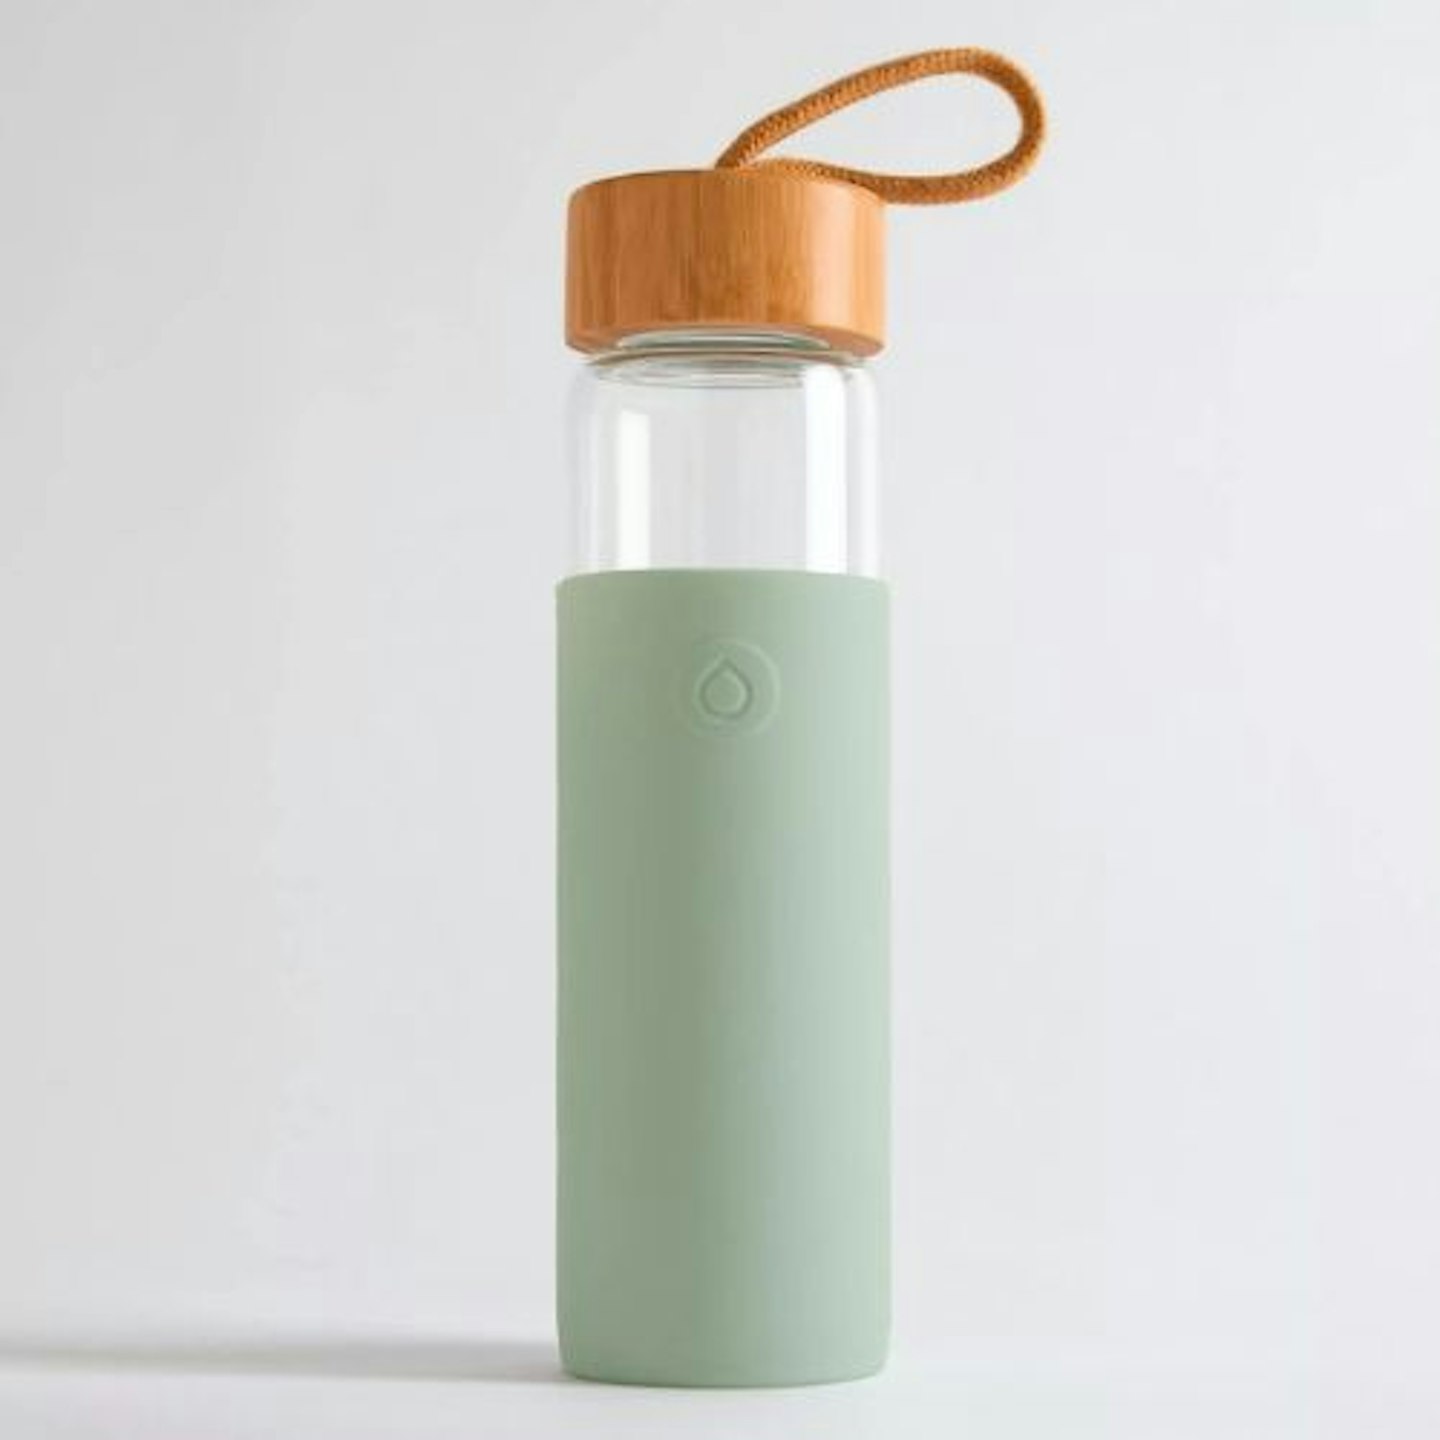 The Agua Bottle